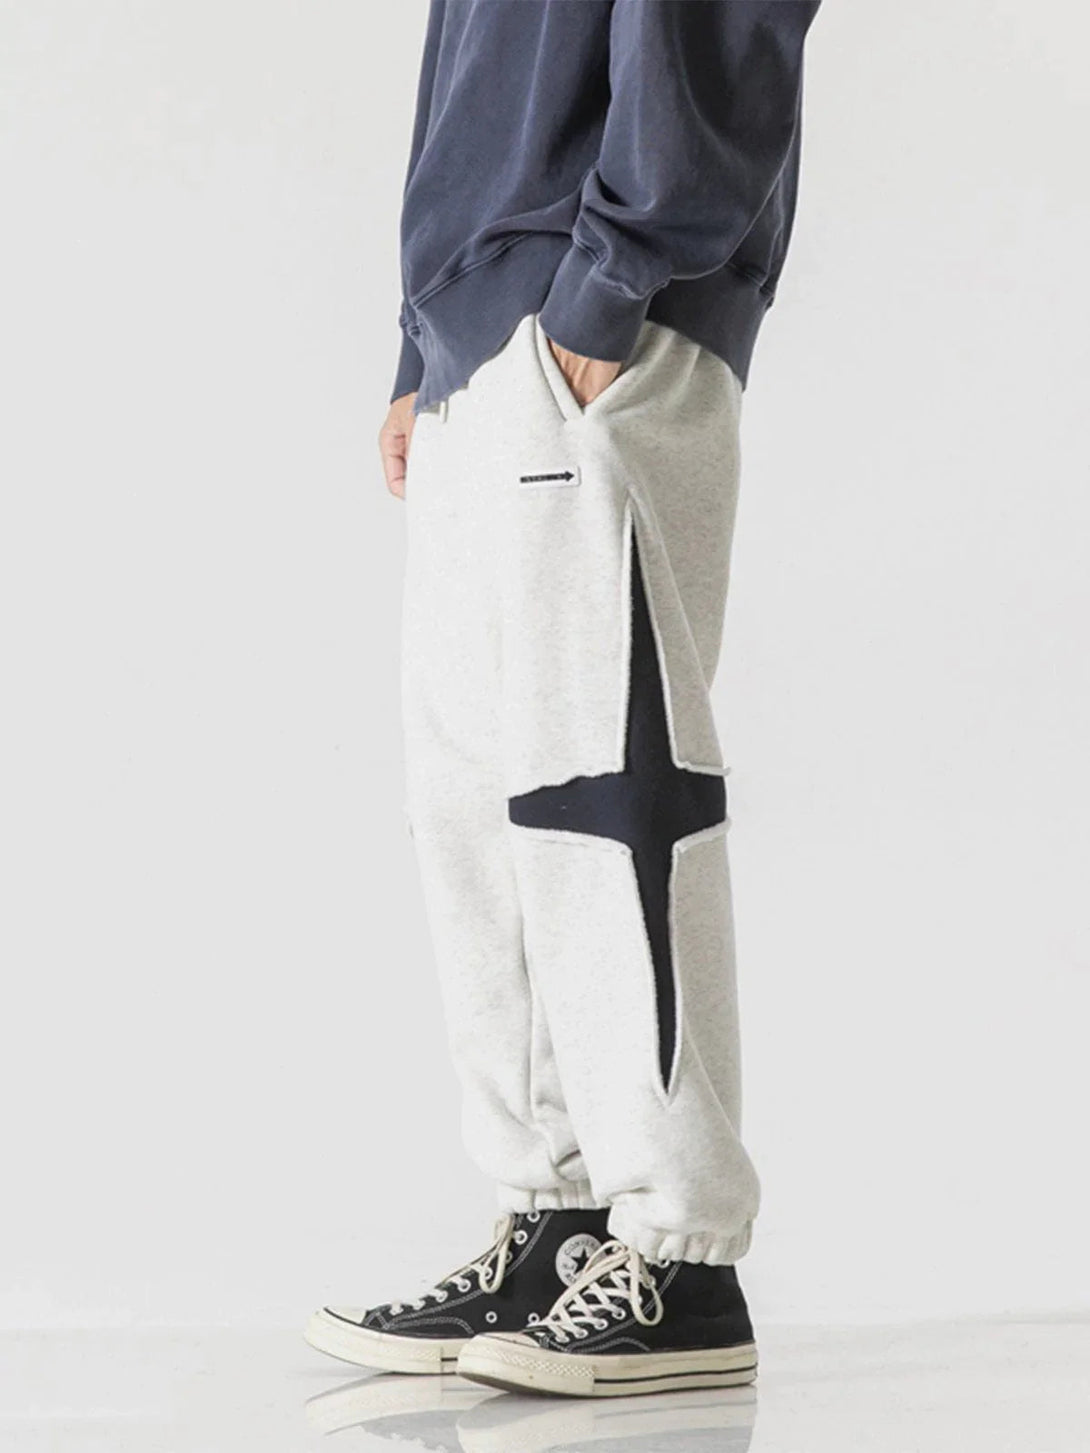 Majesda® - Crossed Star Pants outfit ideas streetwear fashion